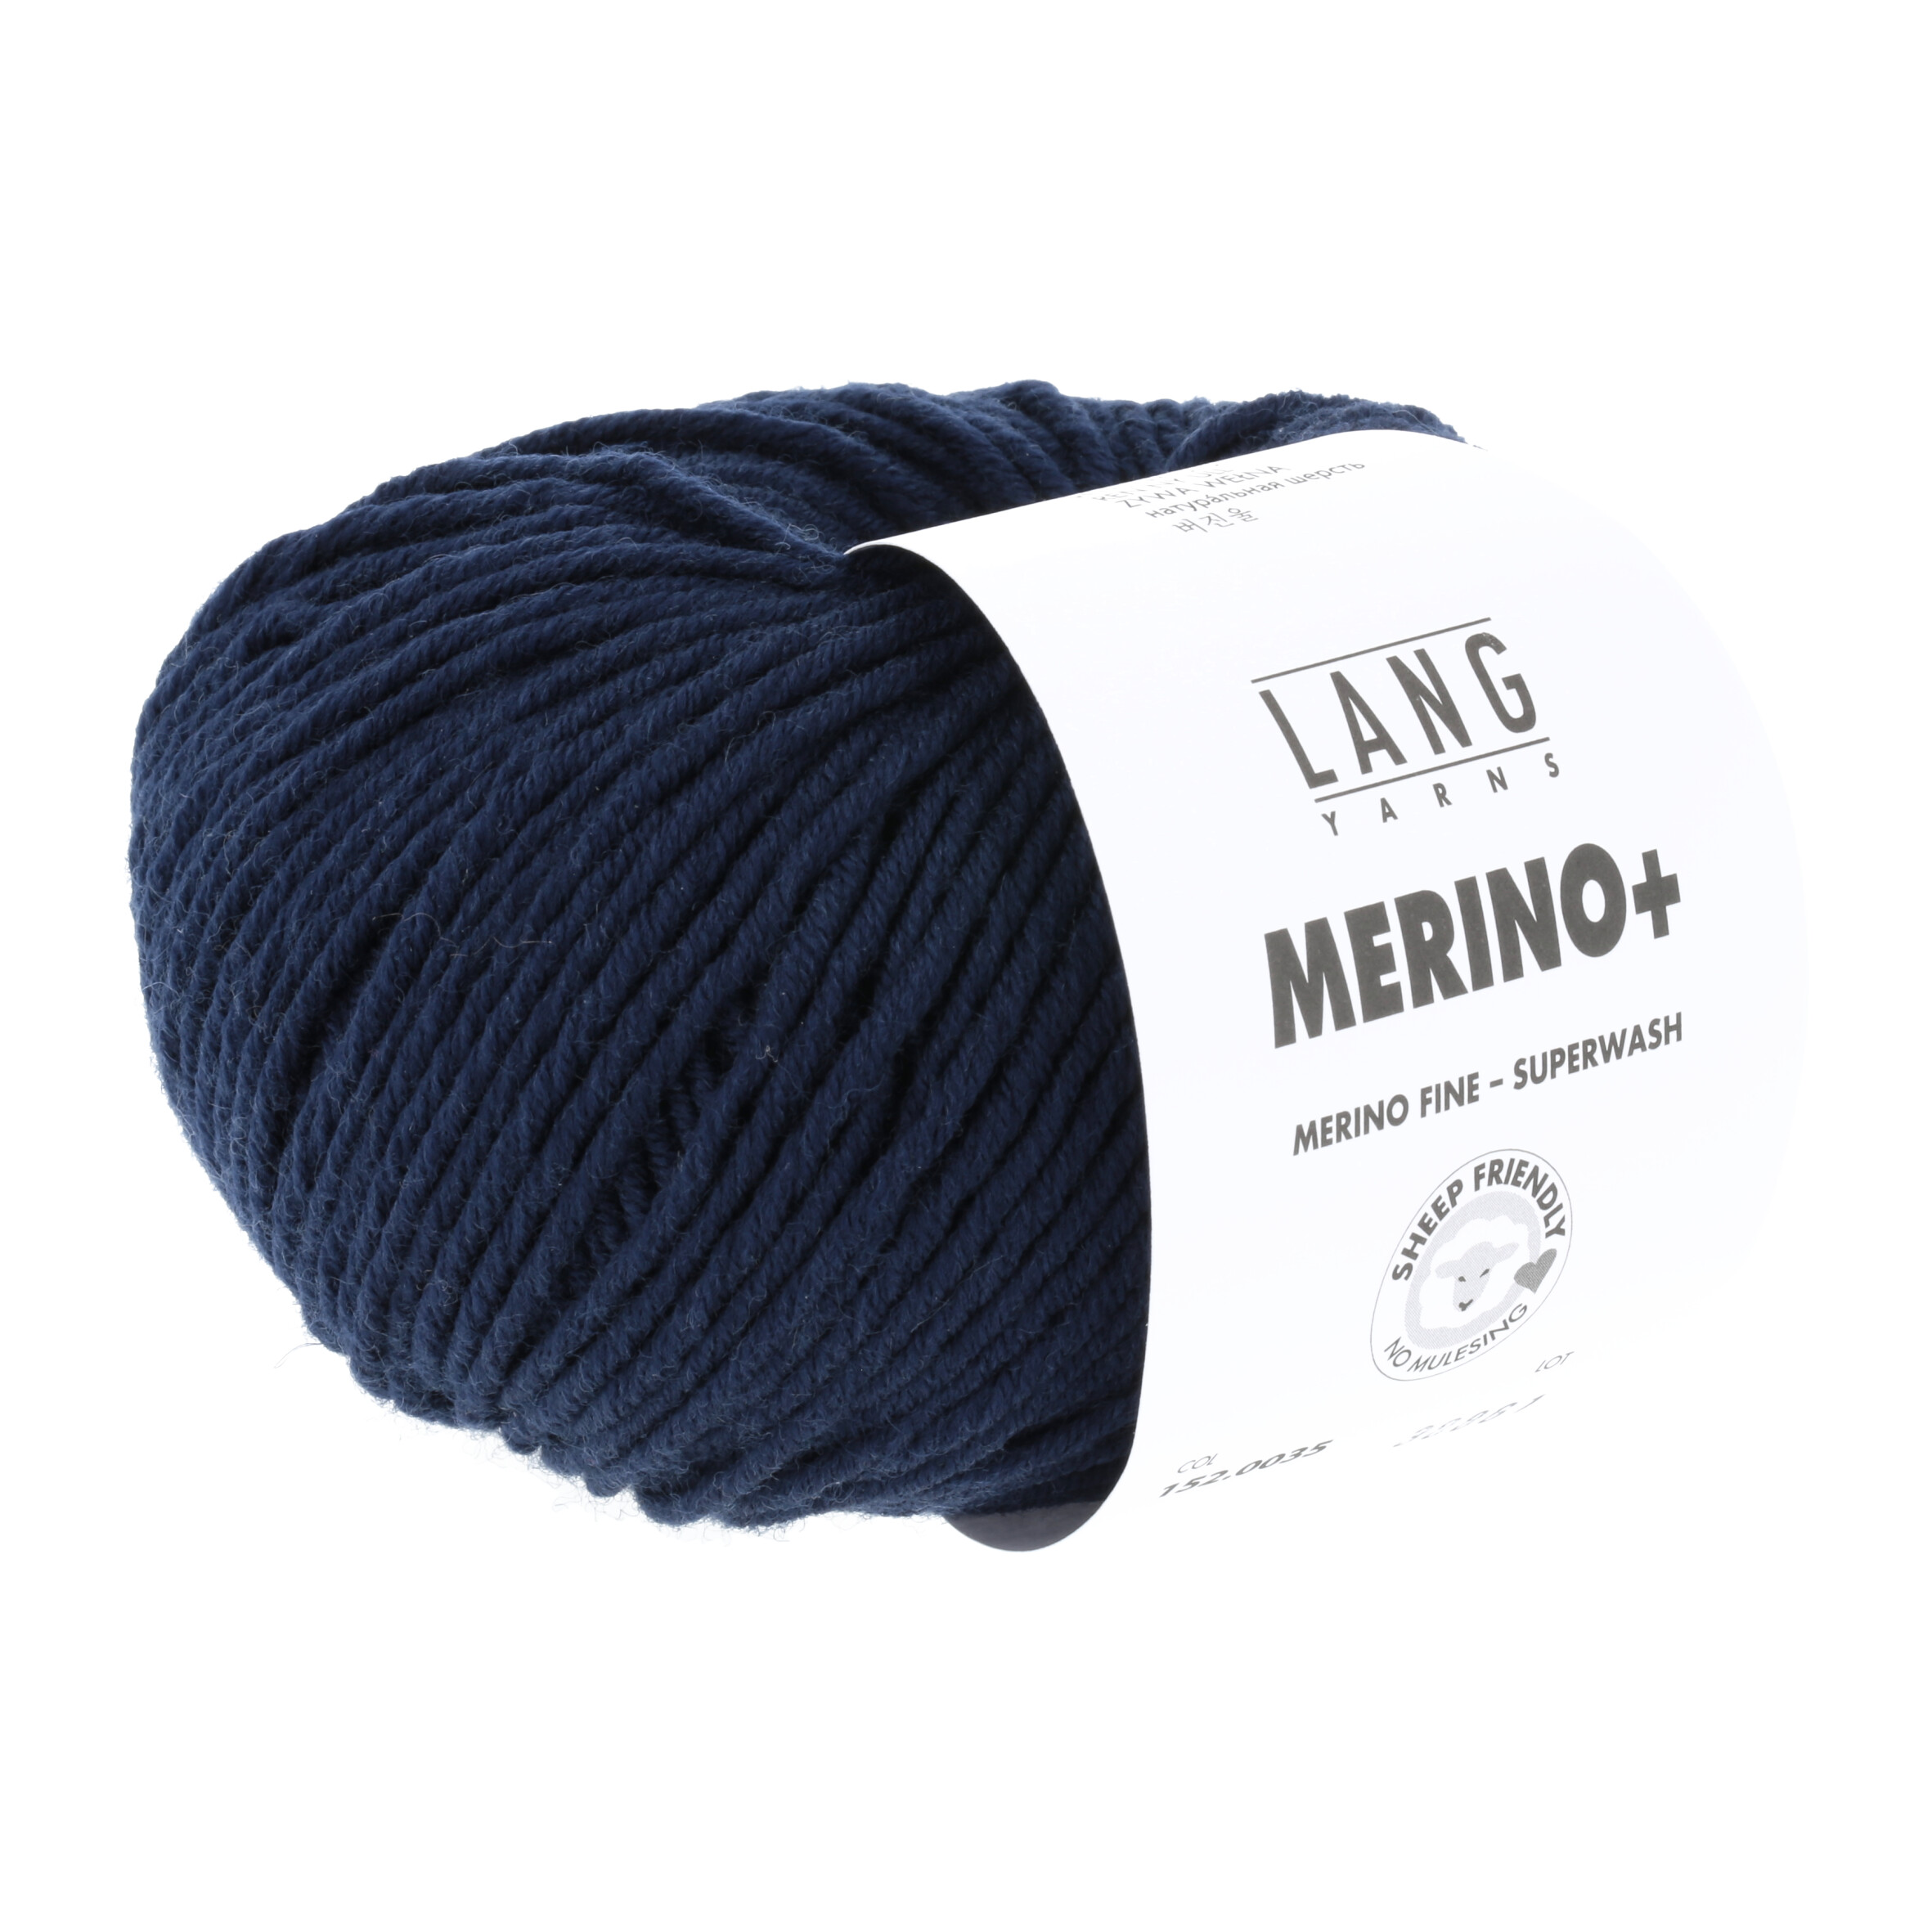 LANG MERINO + 50GR 0035 MARINE